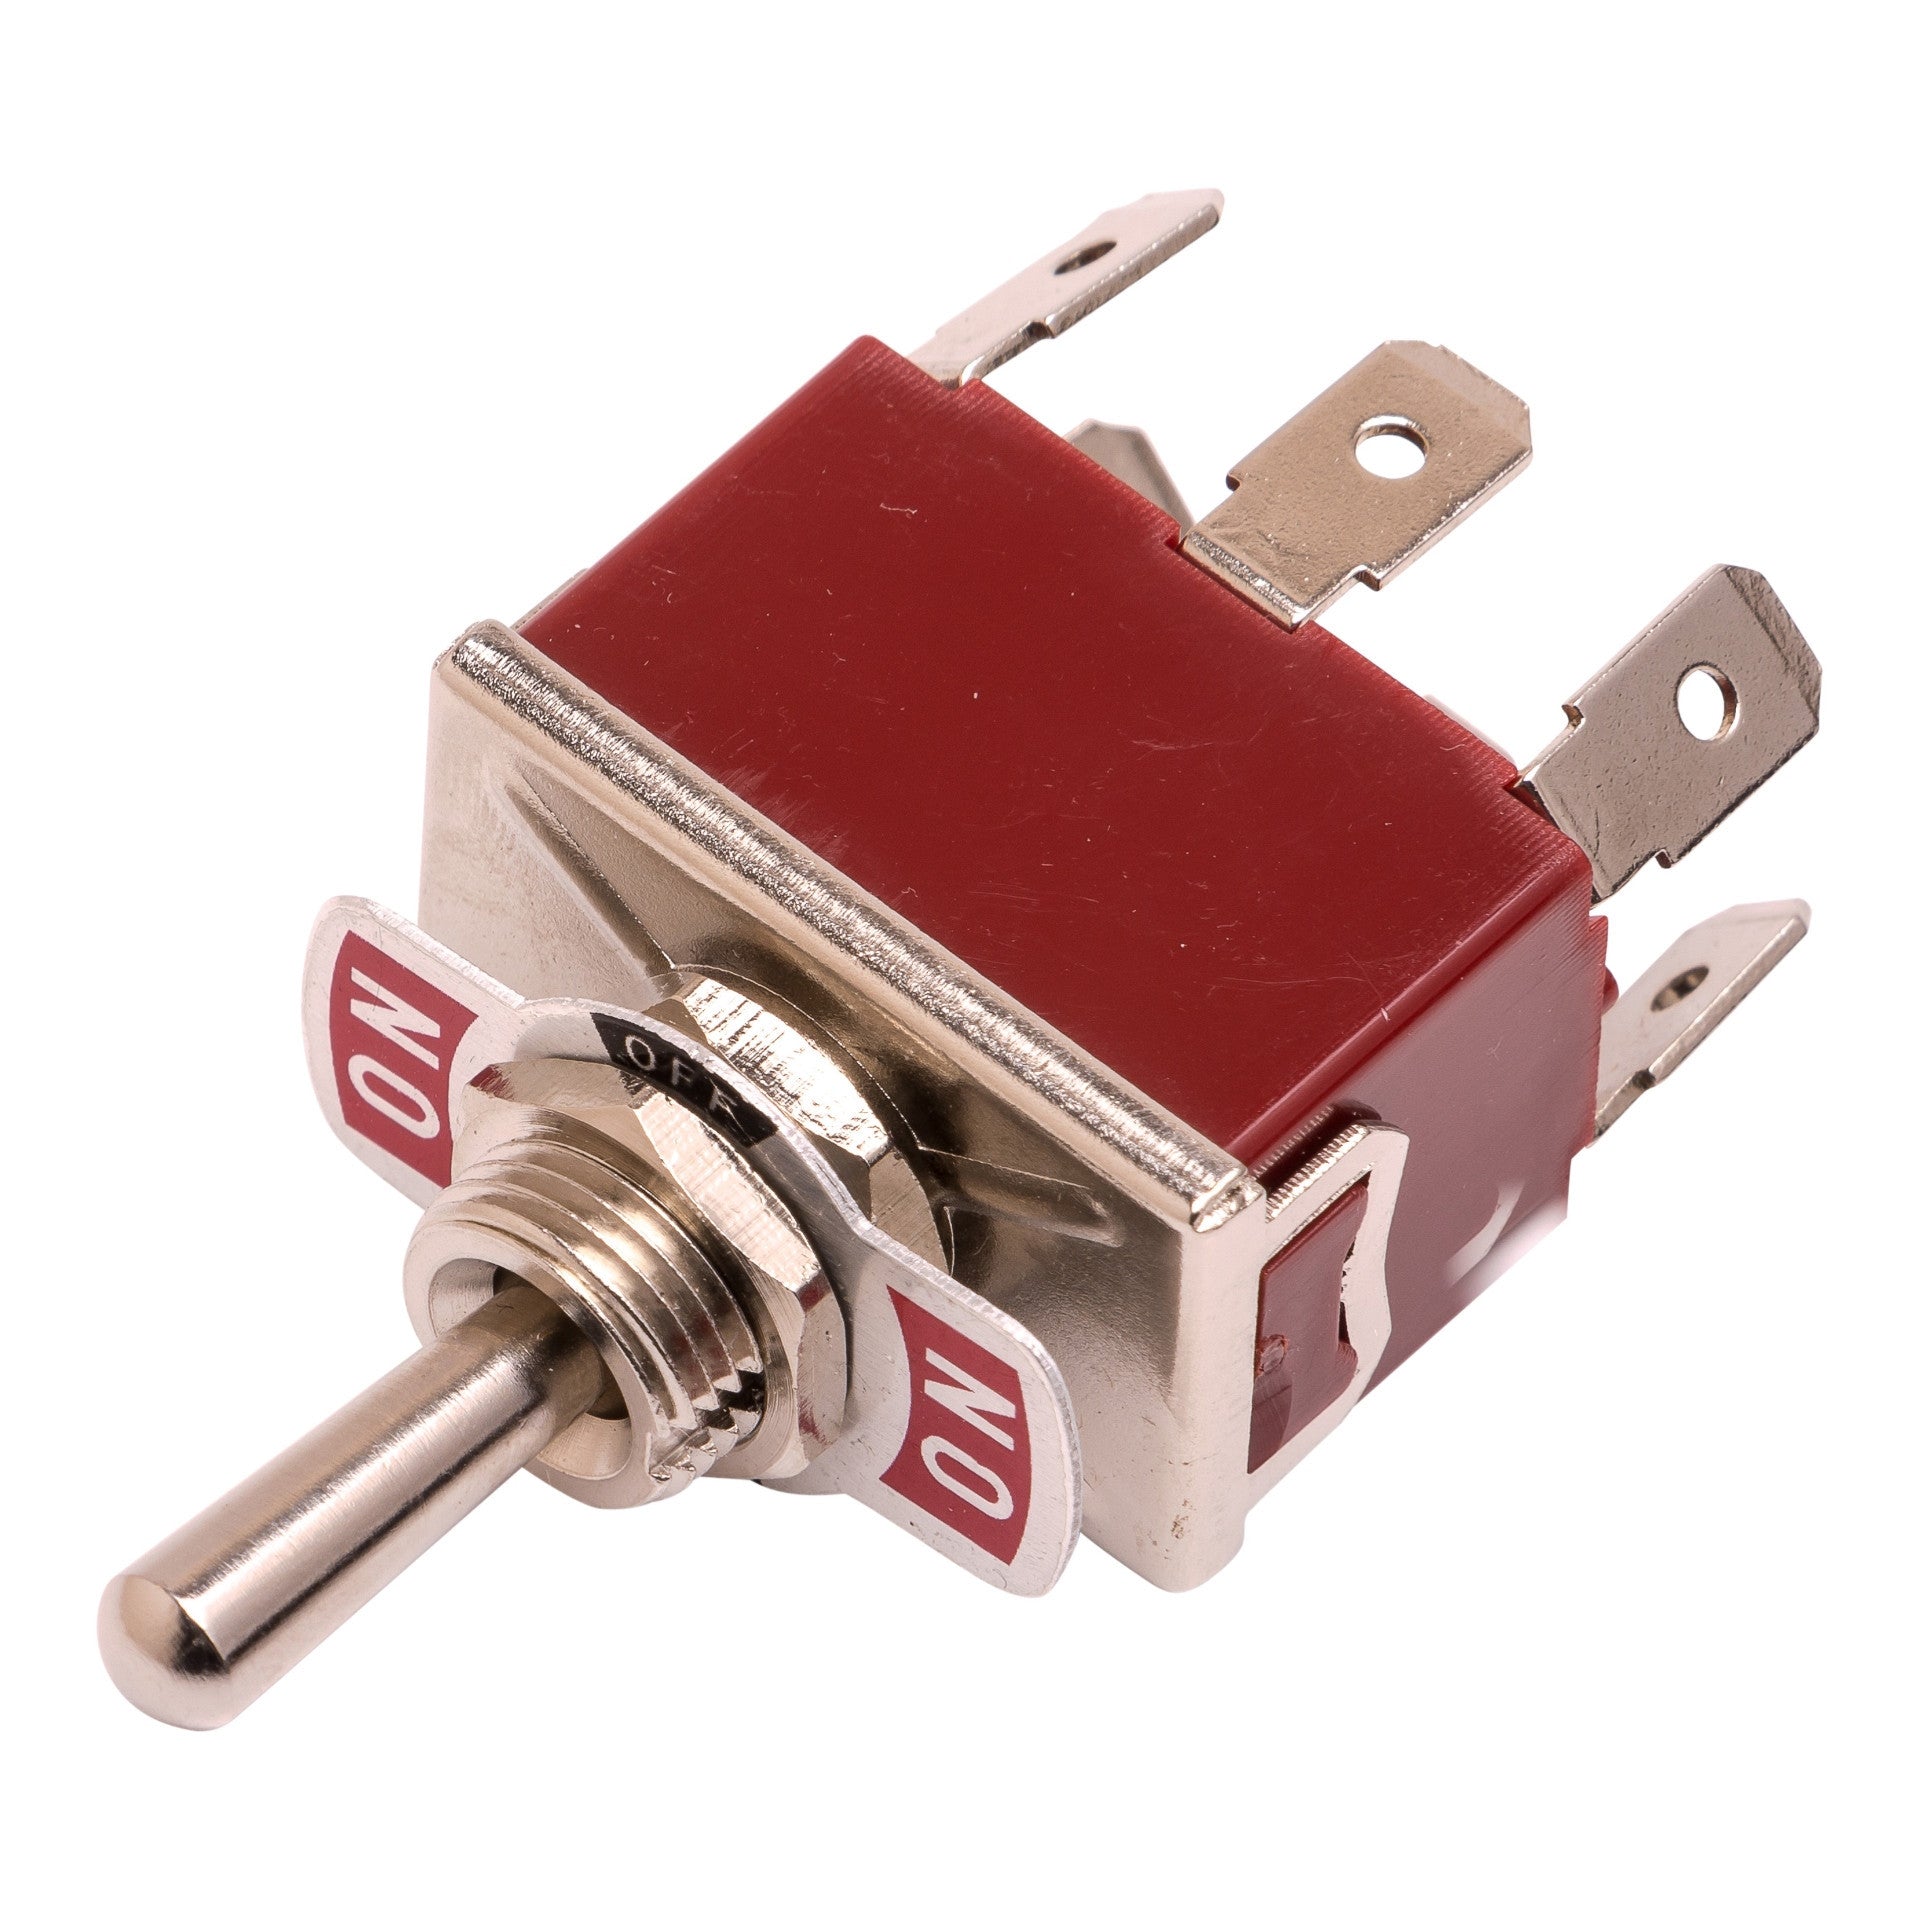 Switch de alternância para atuadores ou motores (DPDT) Product Image